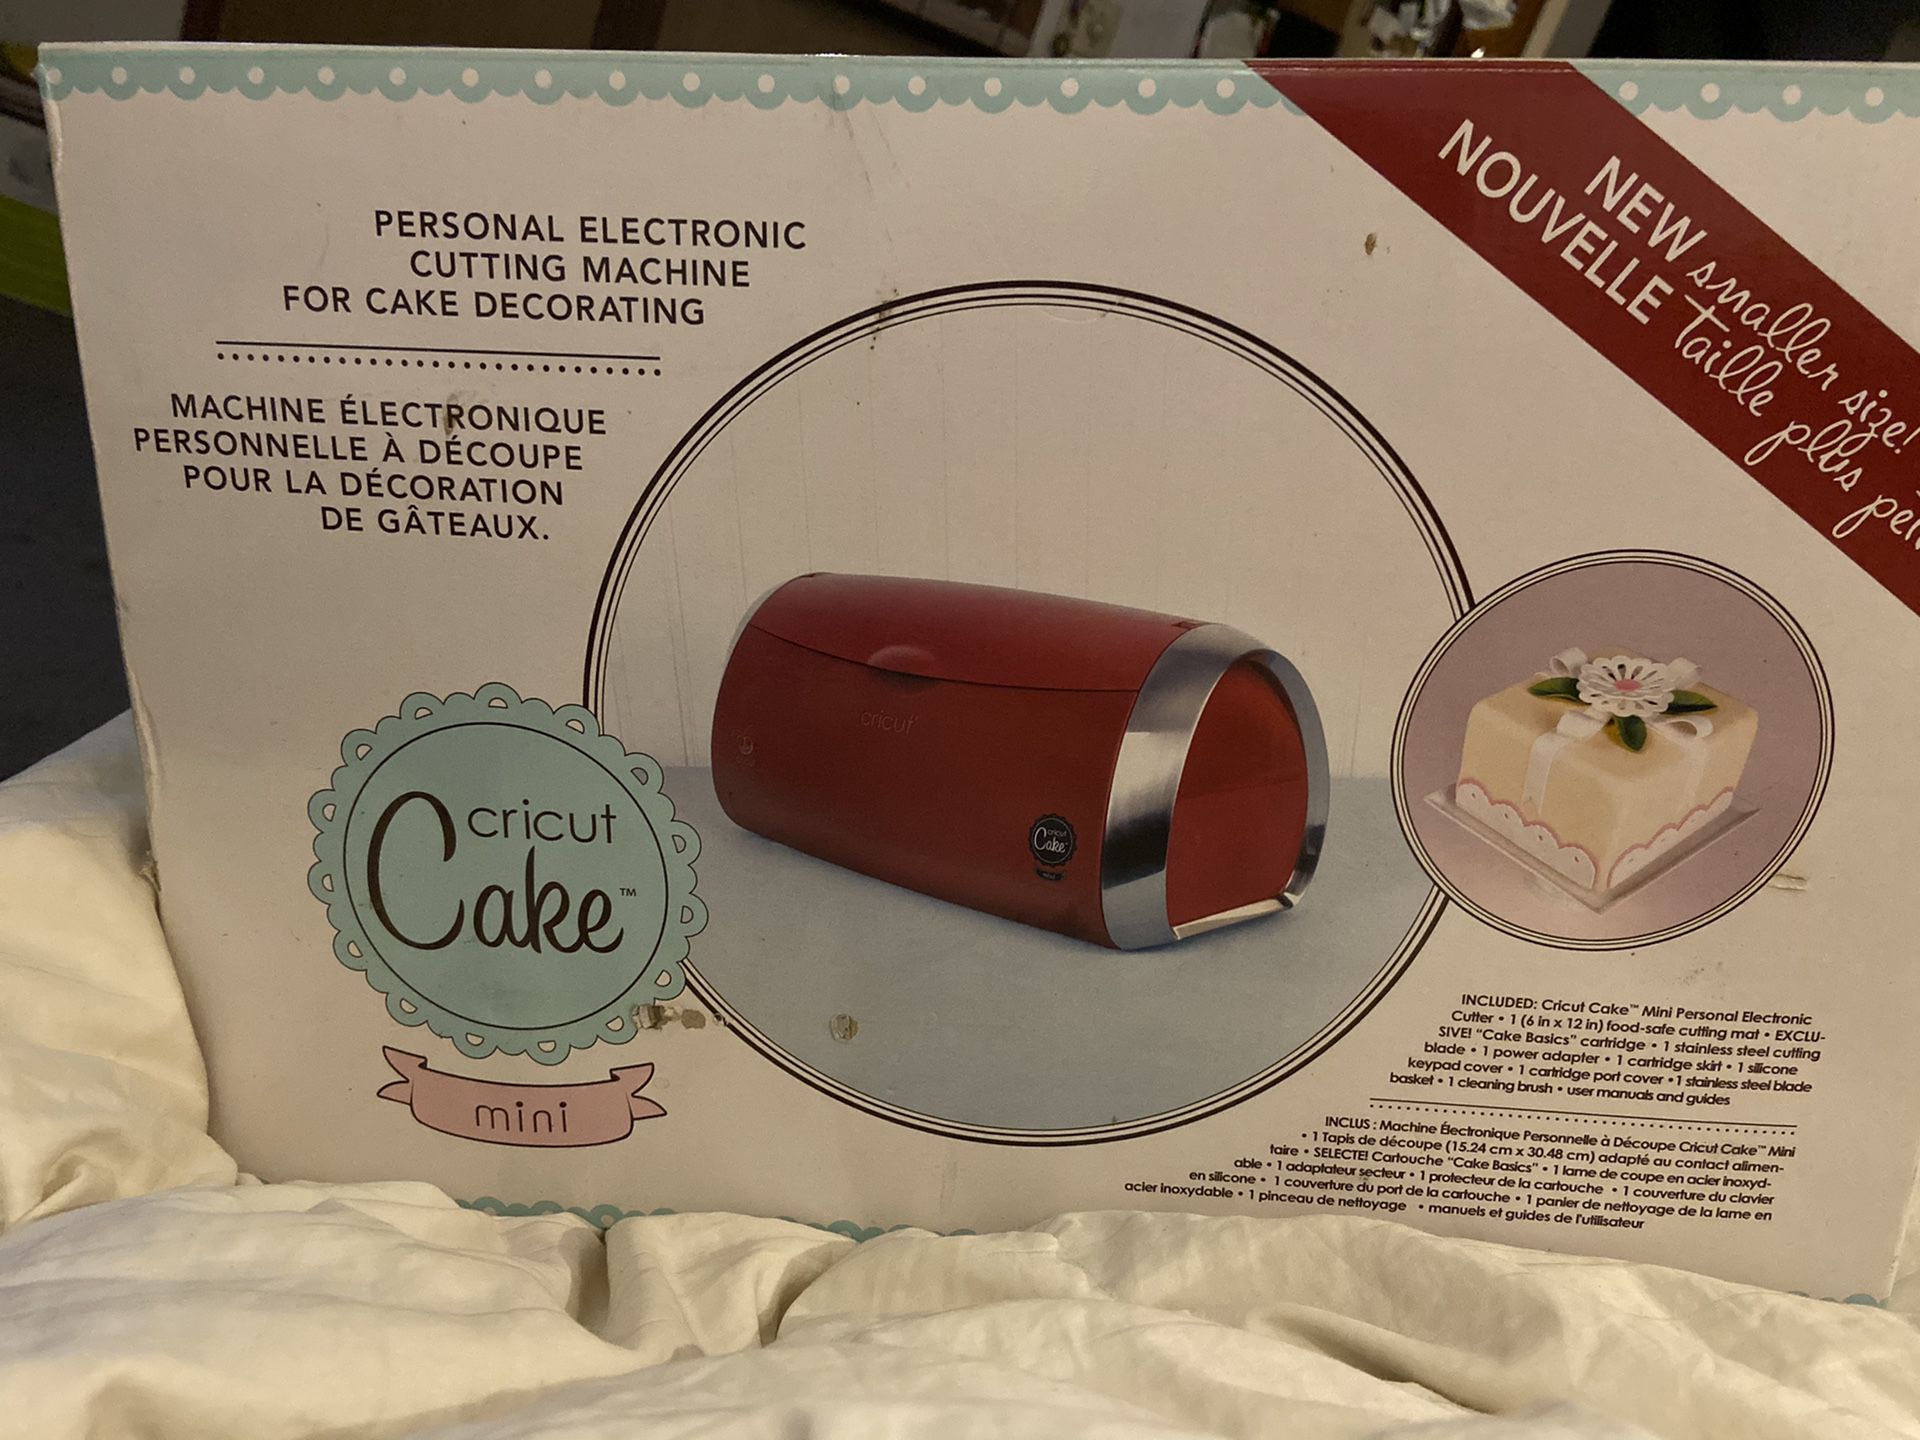 Cricut cake mini new in box. Makes A Great Gift 